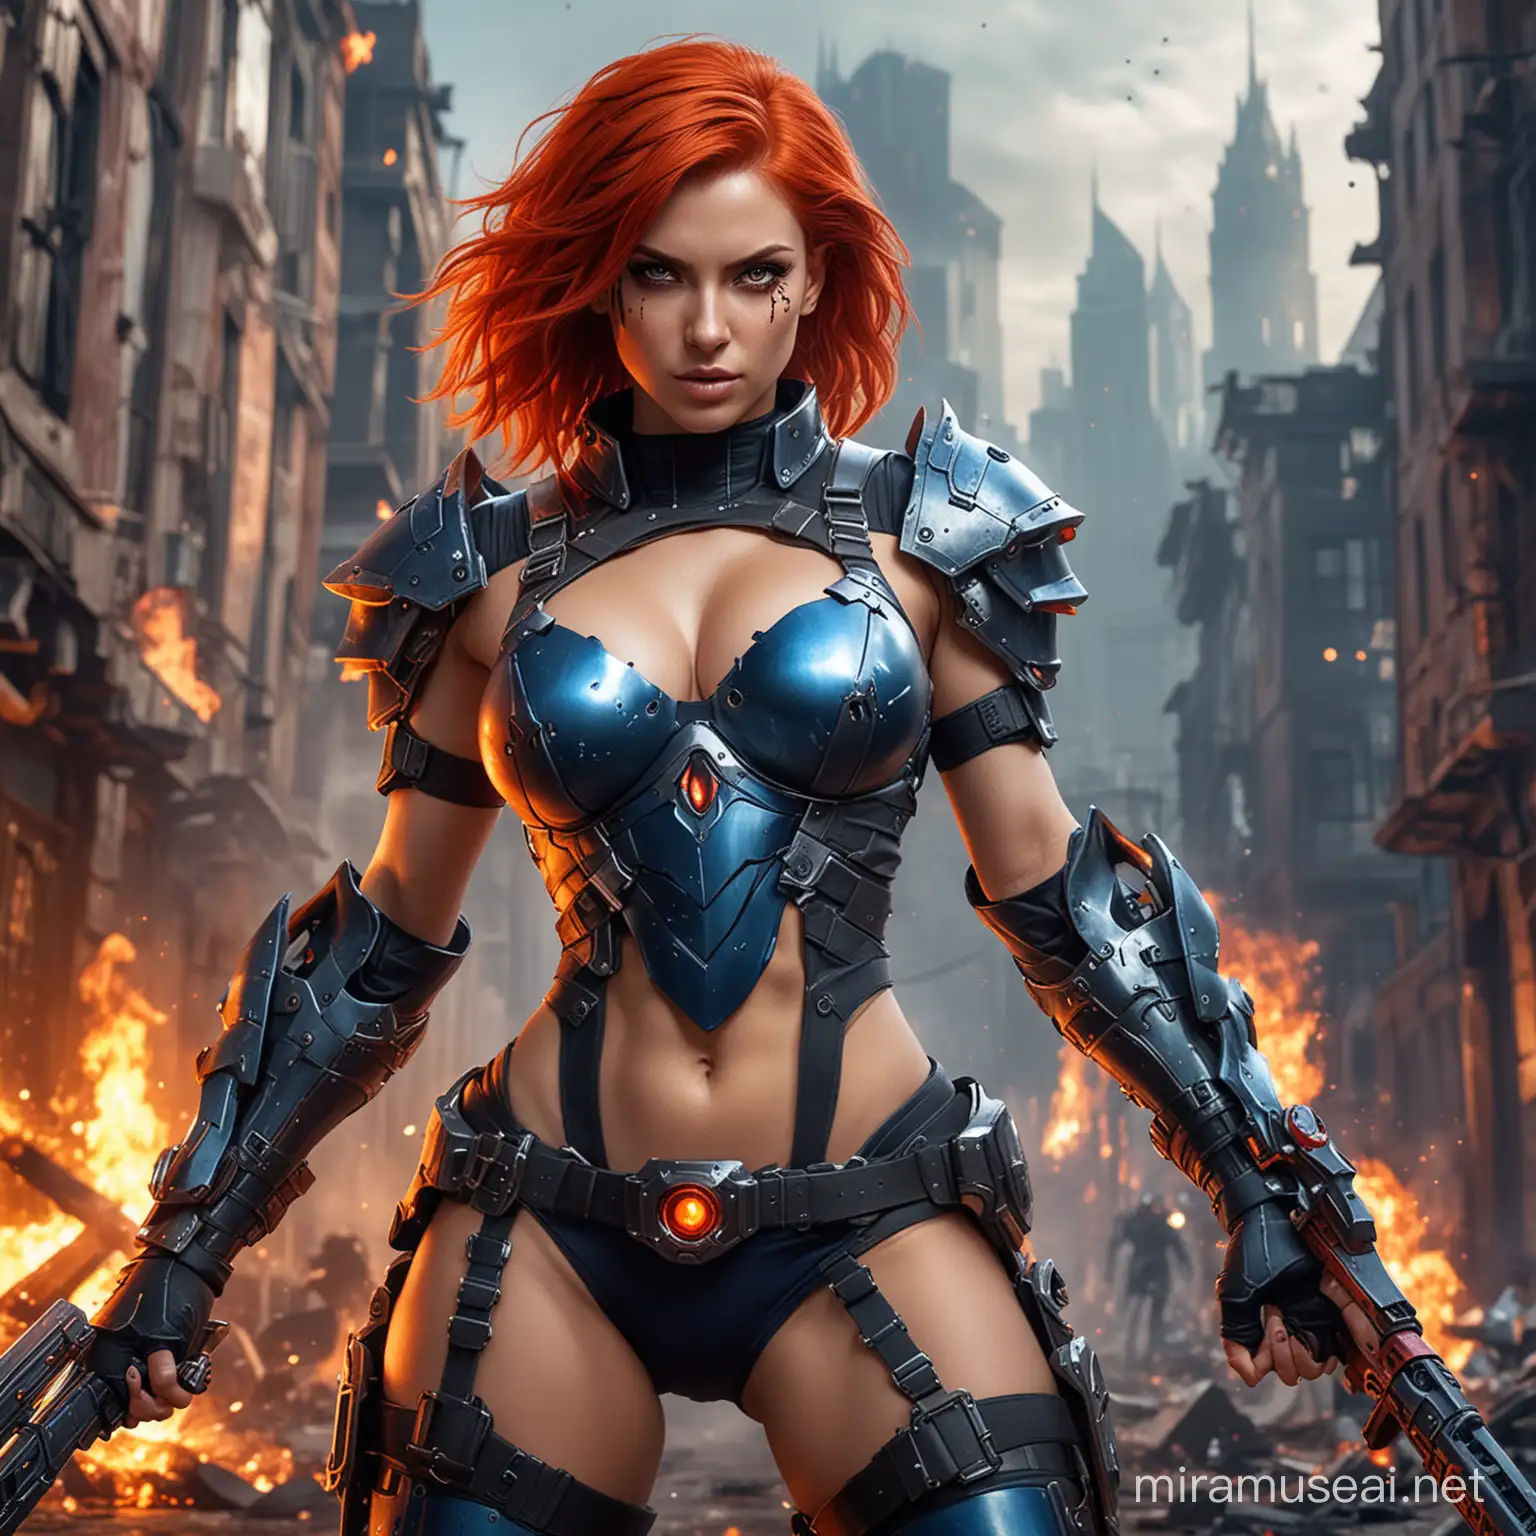 Futuristic Pyromancer Femme Fatale in Dark Armor Amidst Burning Cityscape